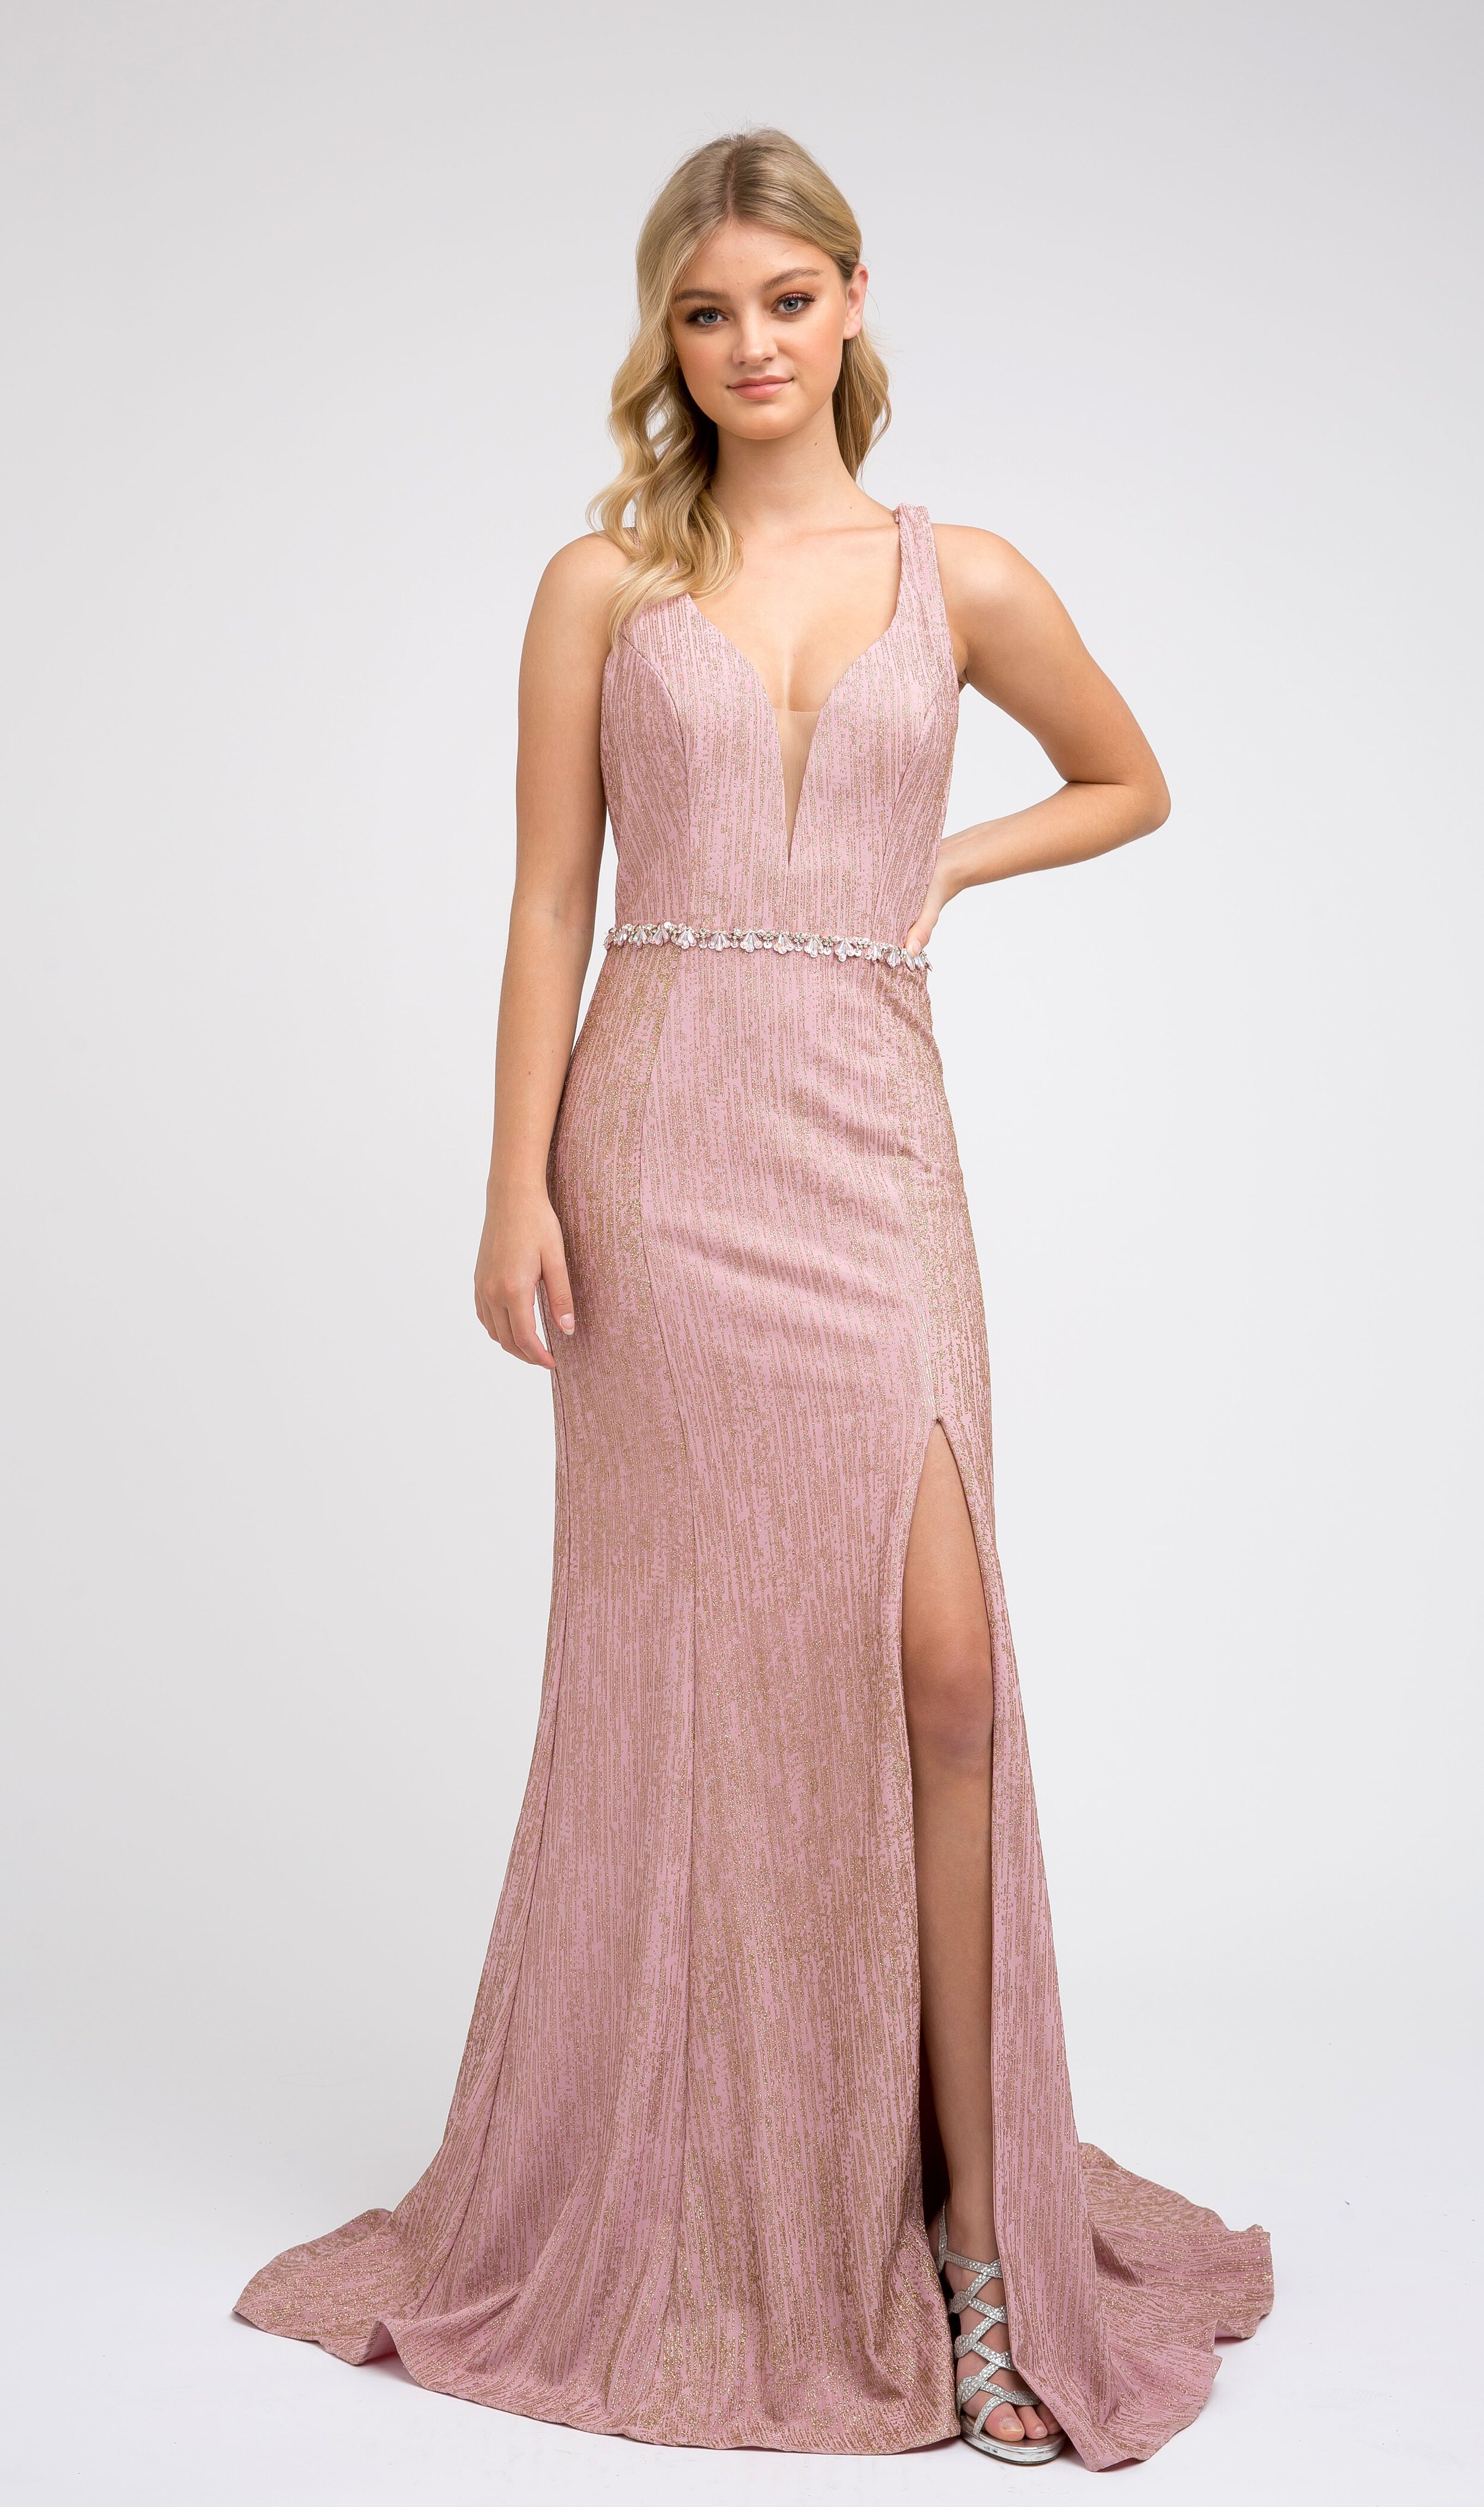 Classy Strapless Lace Gold Wedding Dress Ball Gown Wedding Dress Fs020